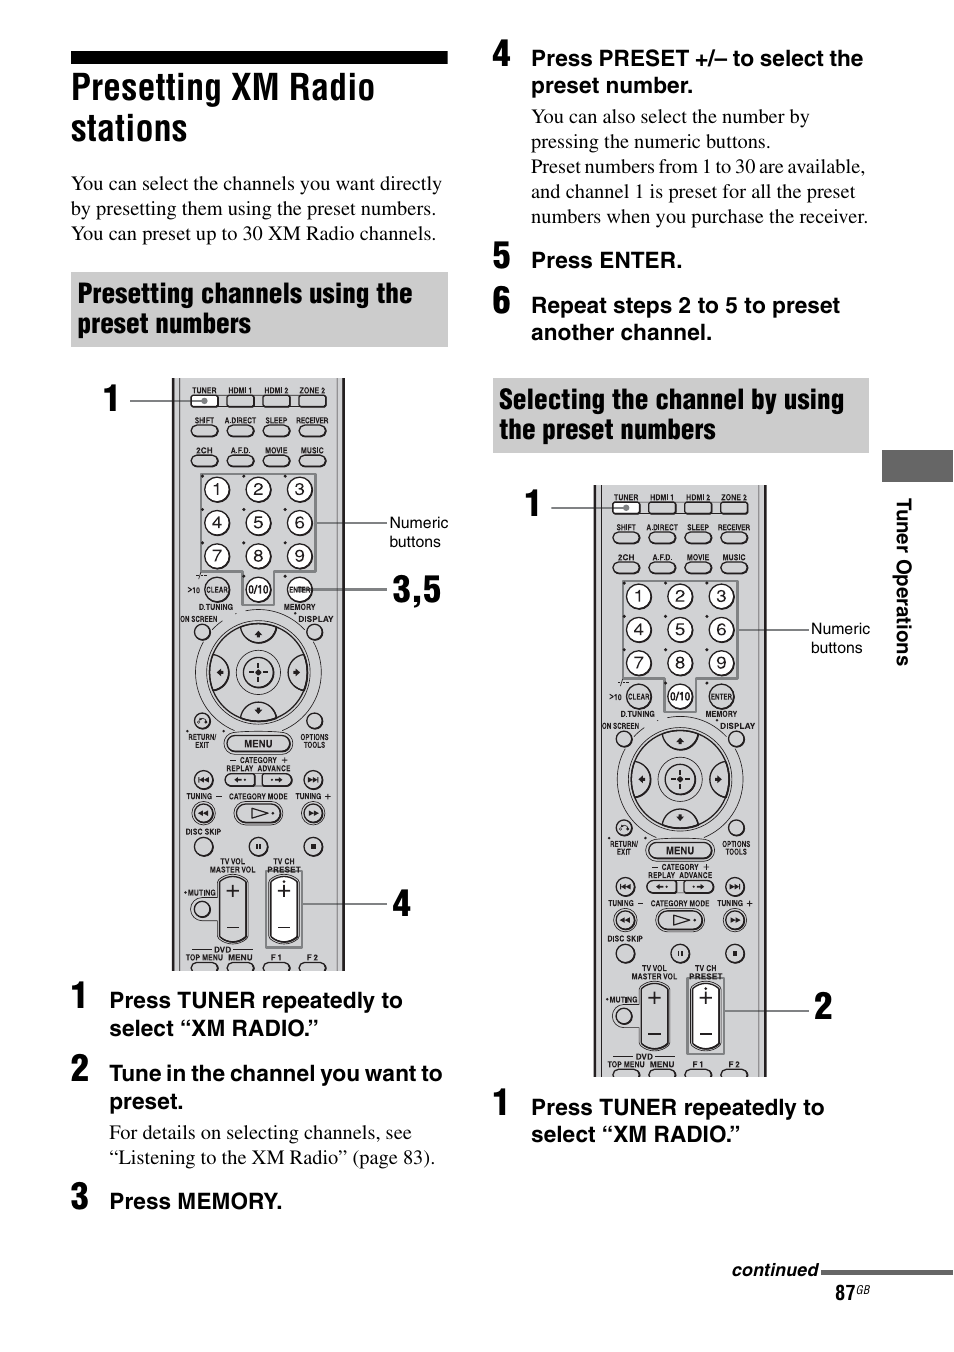 Presetting xm radio stations | Sony STR-DG1000 User Manual | Page 87 / 123